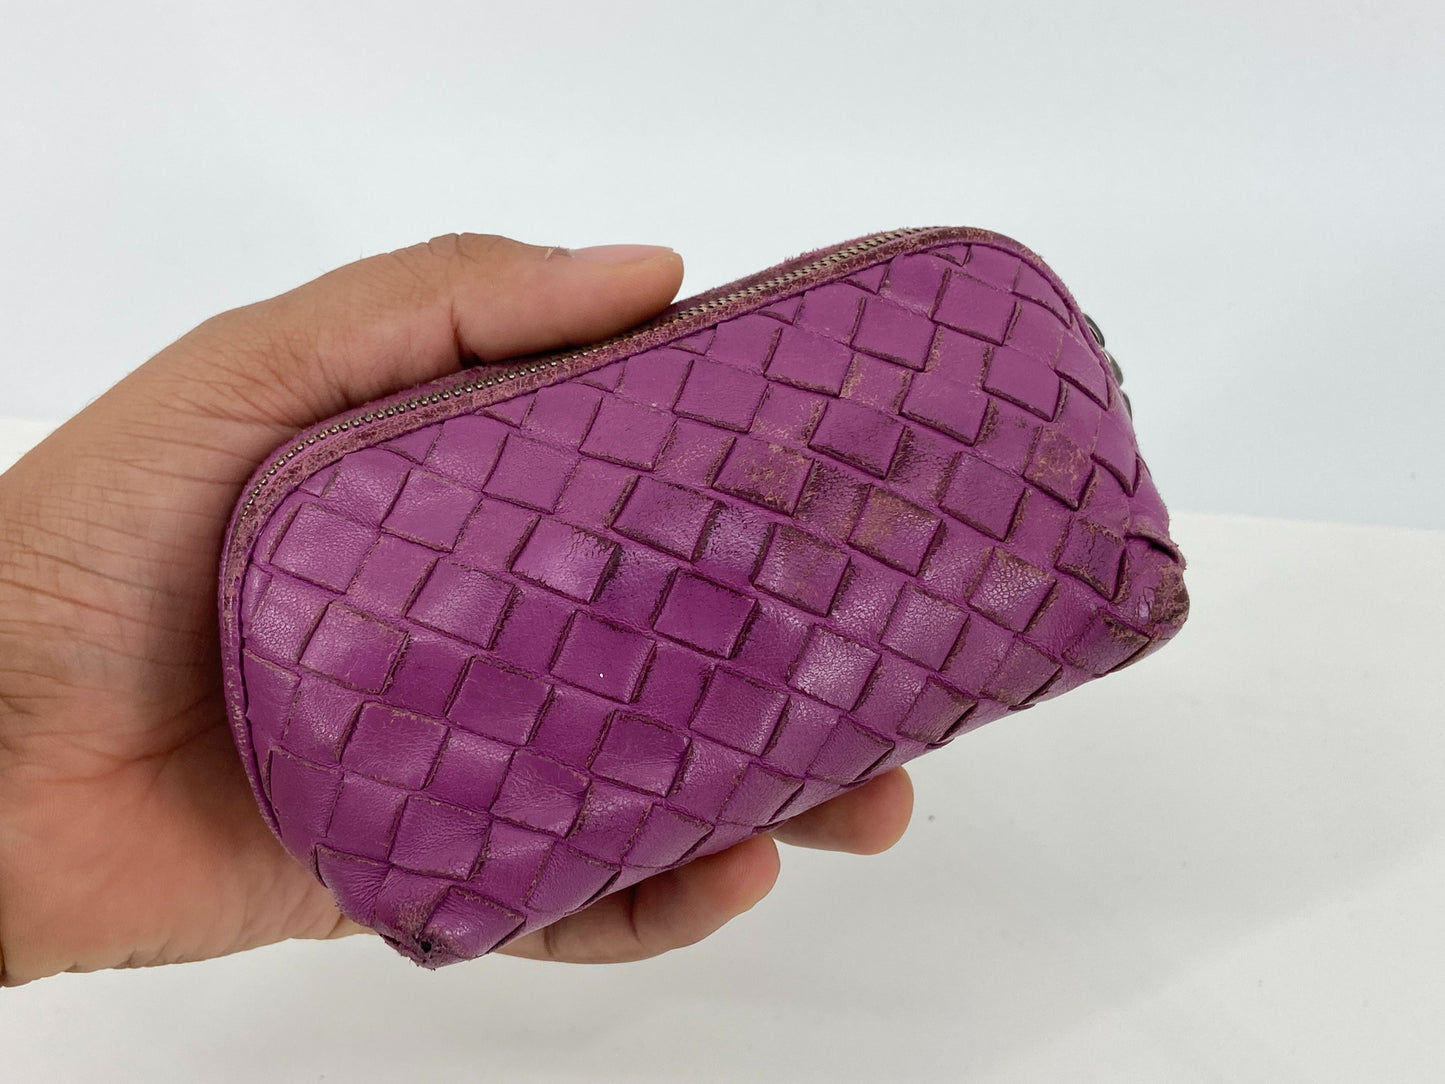 Bottega Veneta Woven Leather Pouch Purple incl. Dustbag